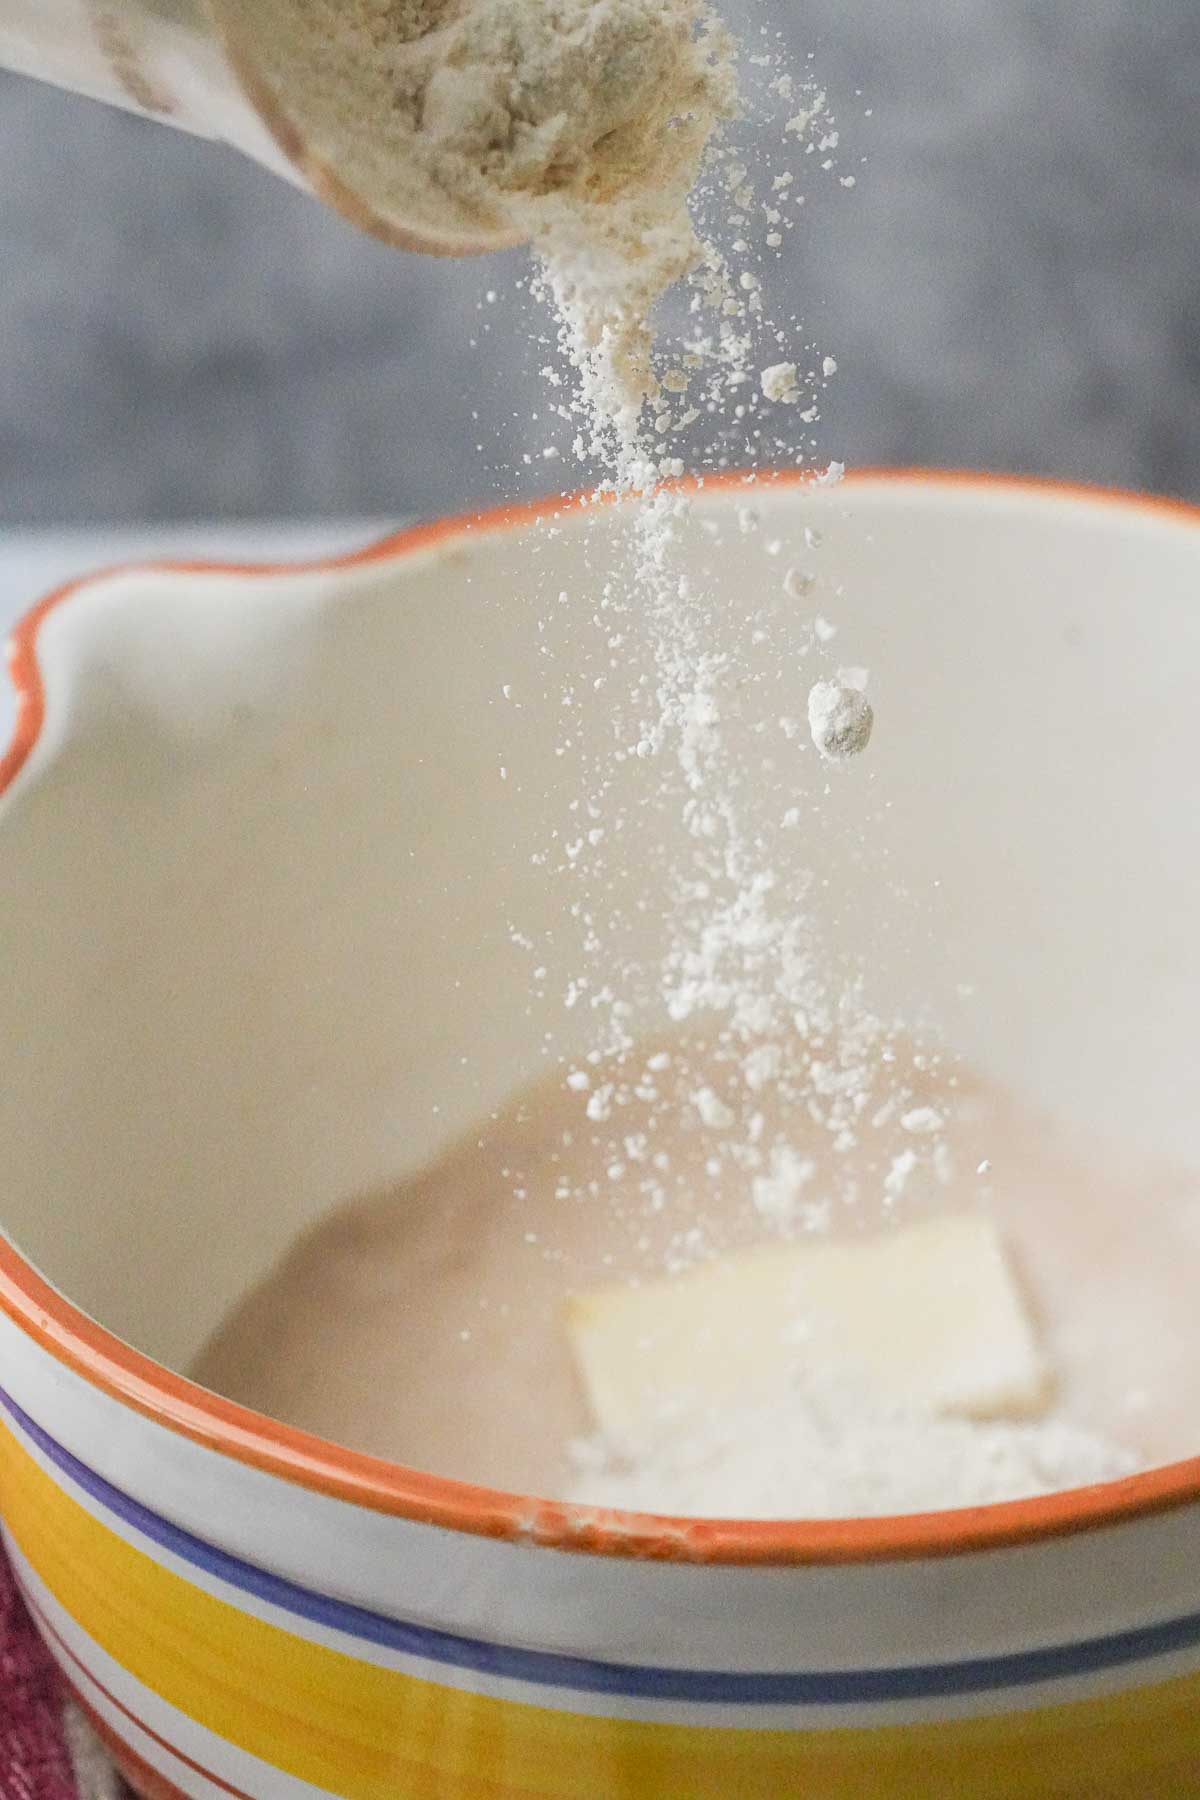 A person pouring flour into a mixing bowl.